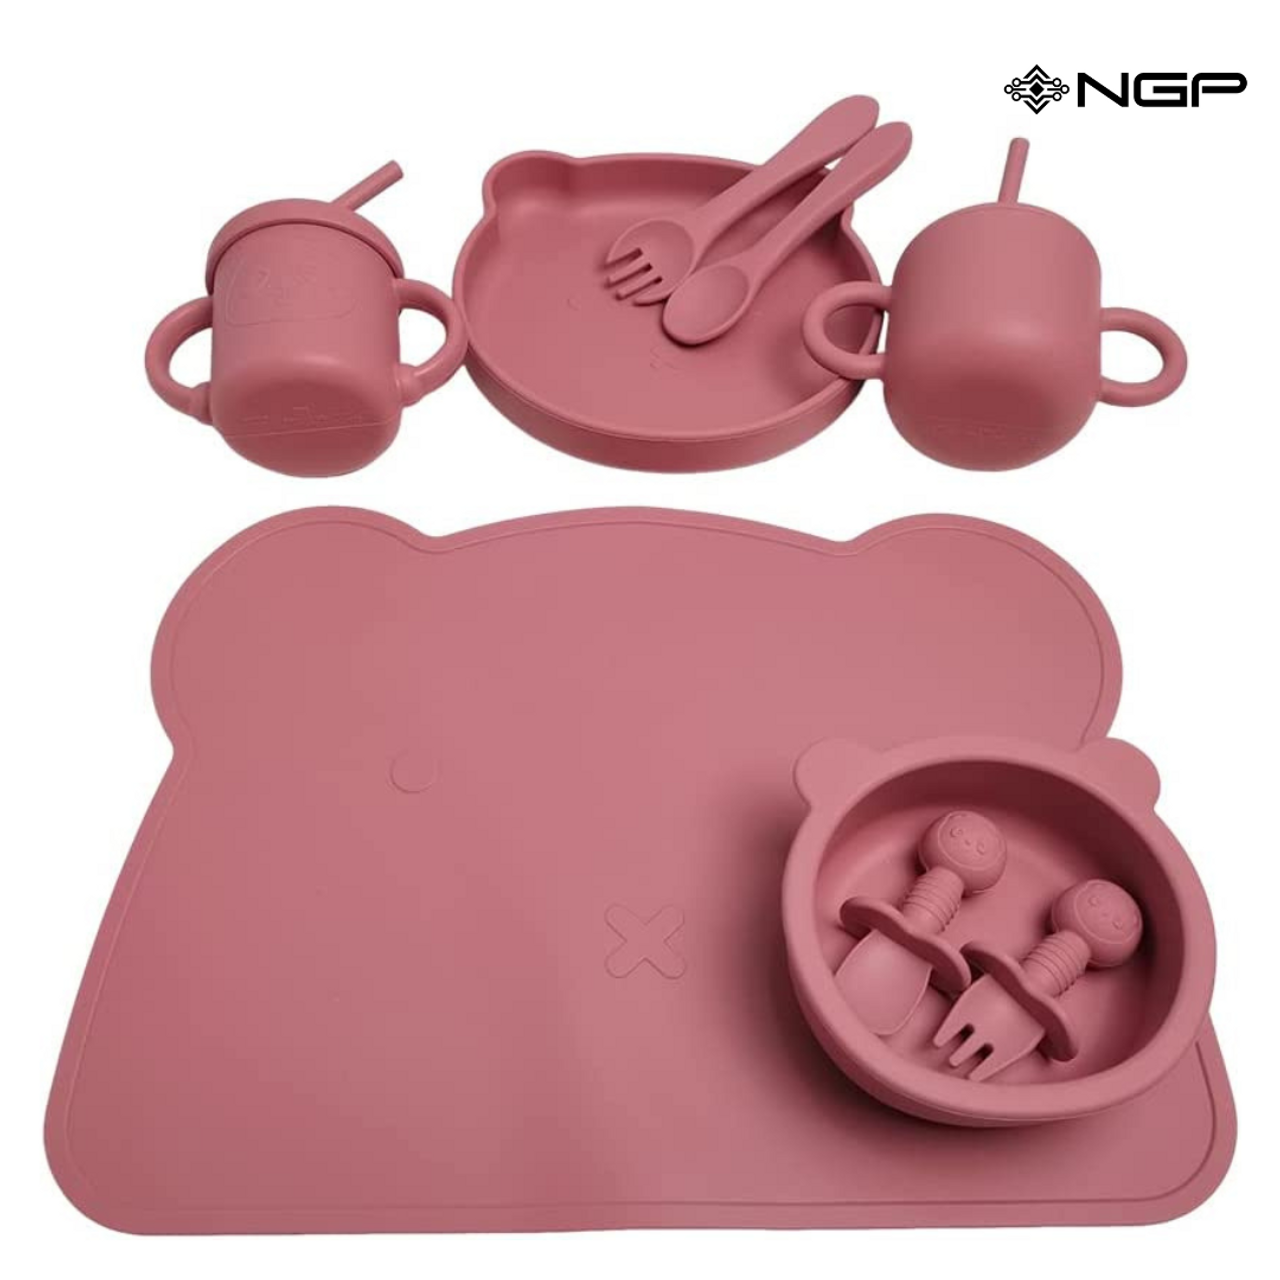 Nala Baby Feeding Set of 7, Silicone Baby Tableware Set, Food